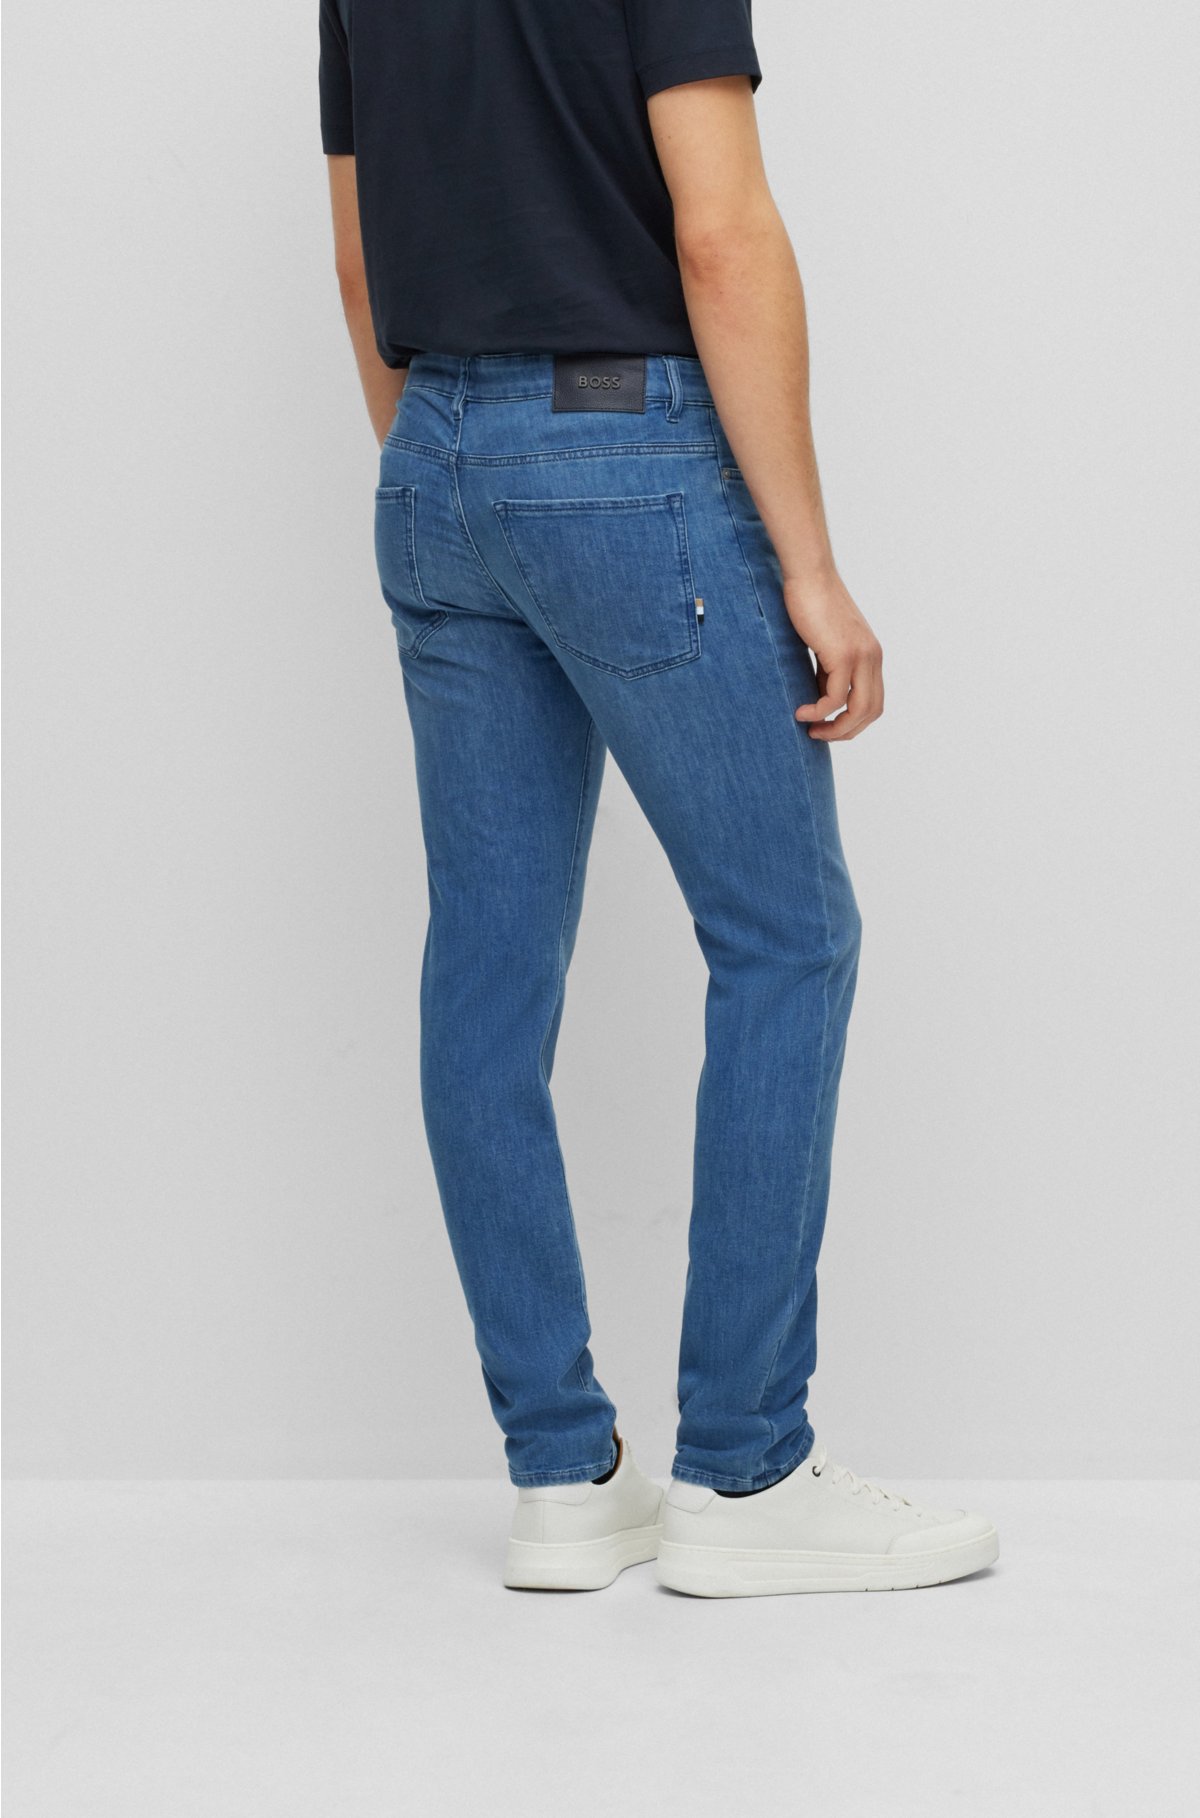 HUGO - Relaxed-fit jeans in ocean-blue denim